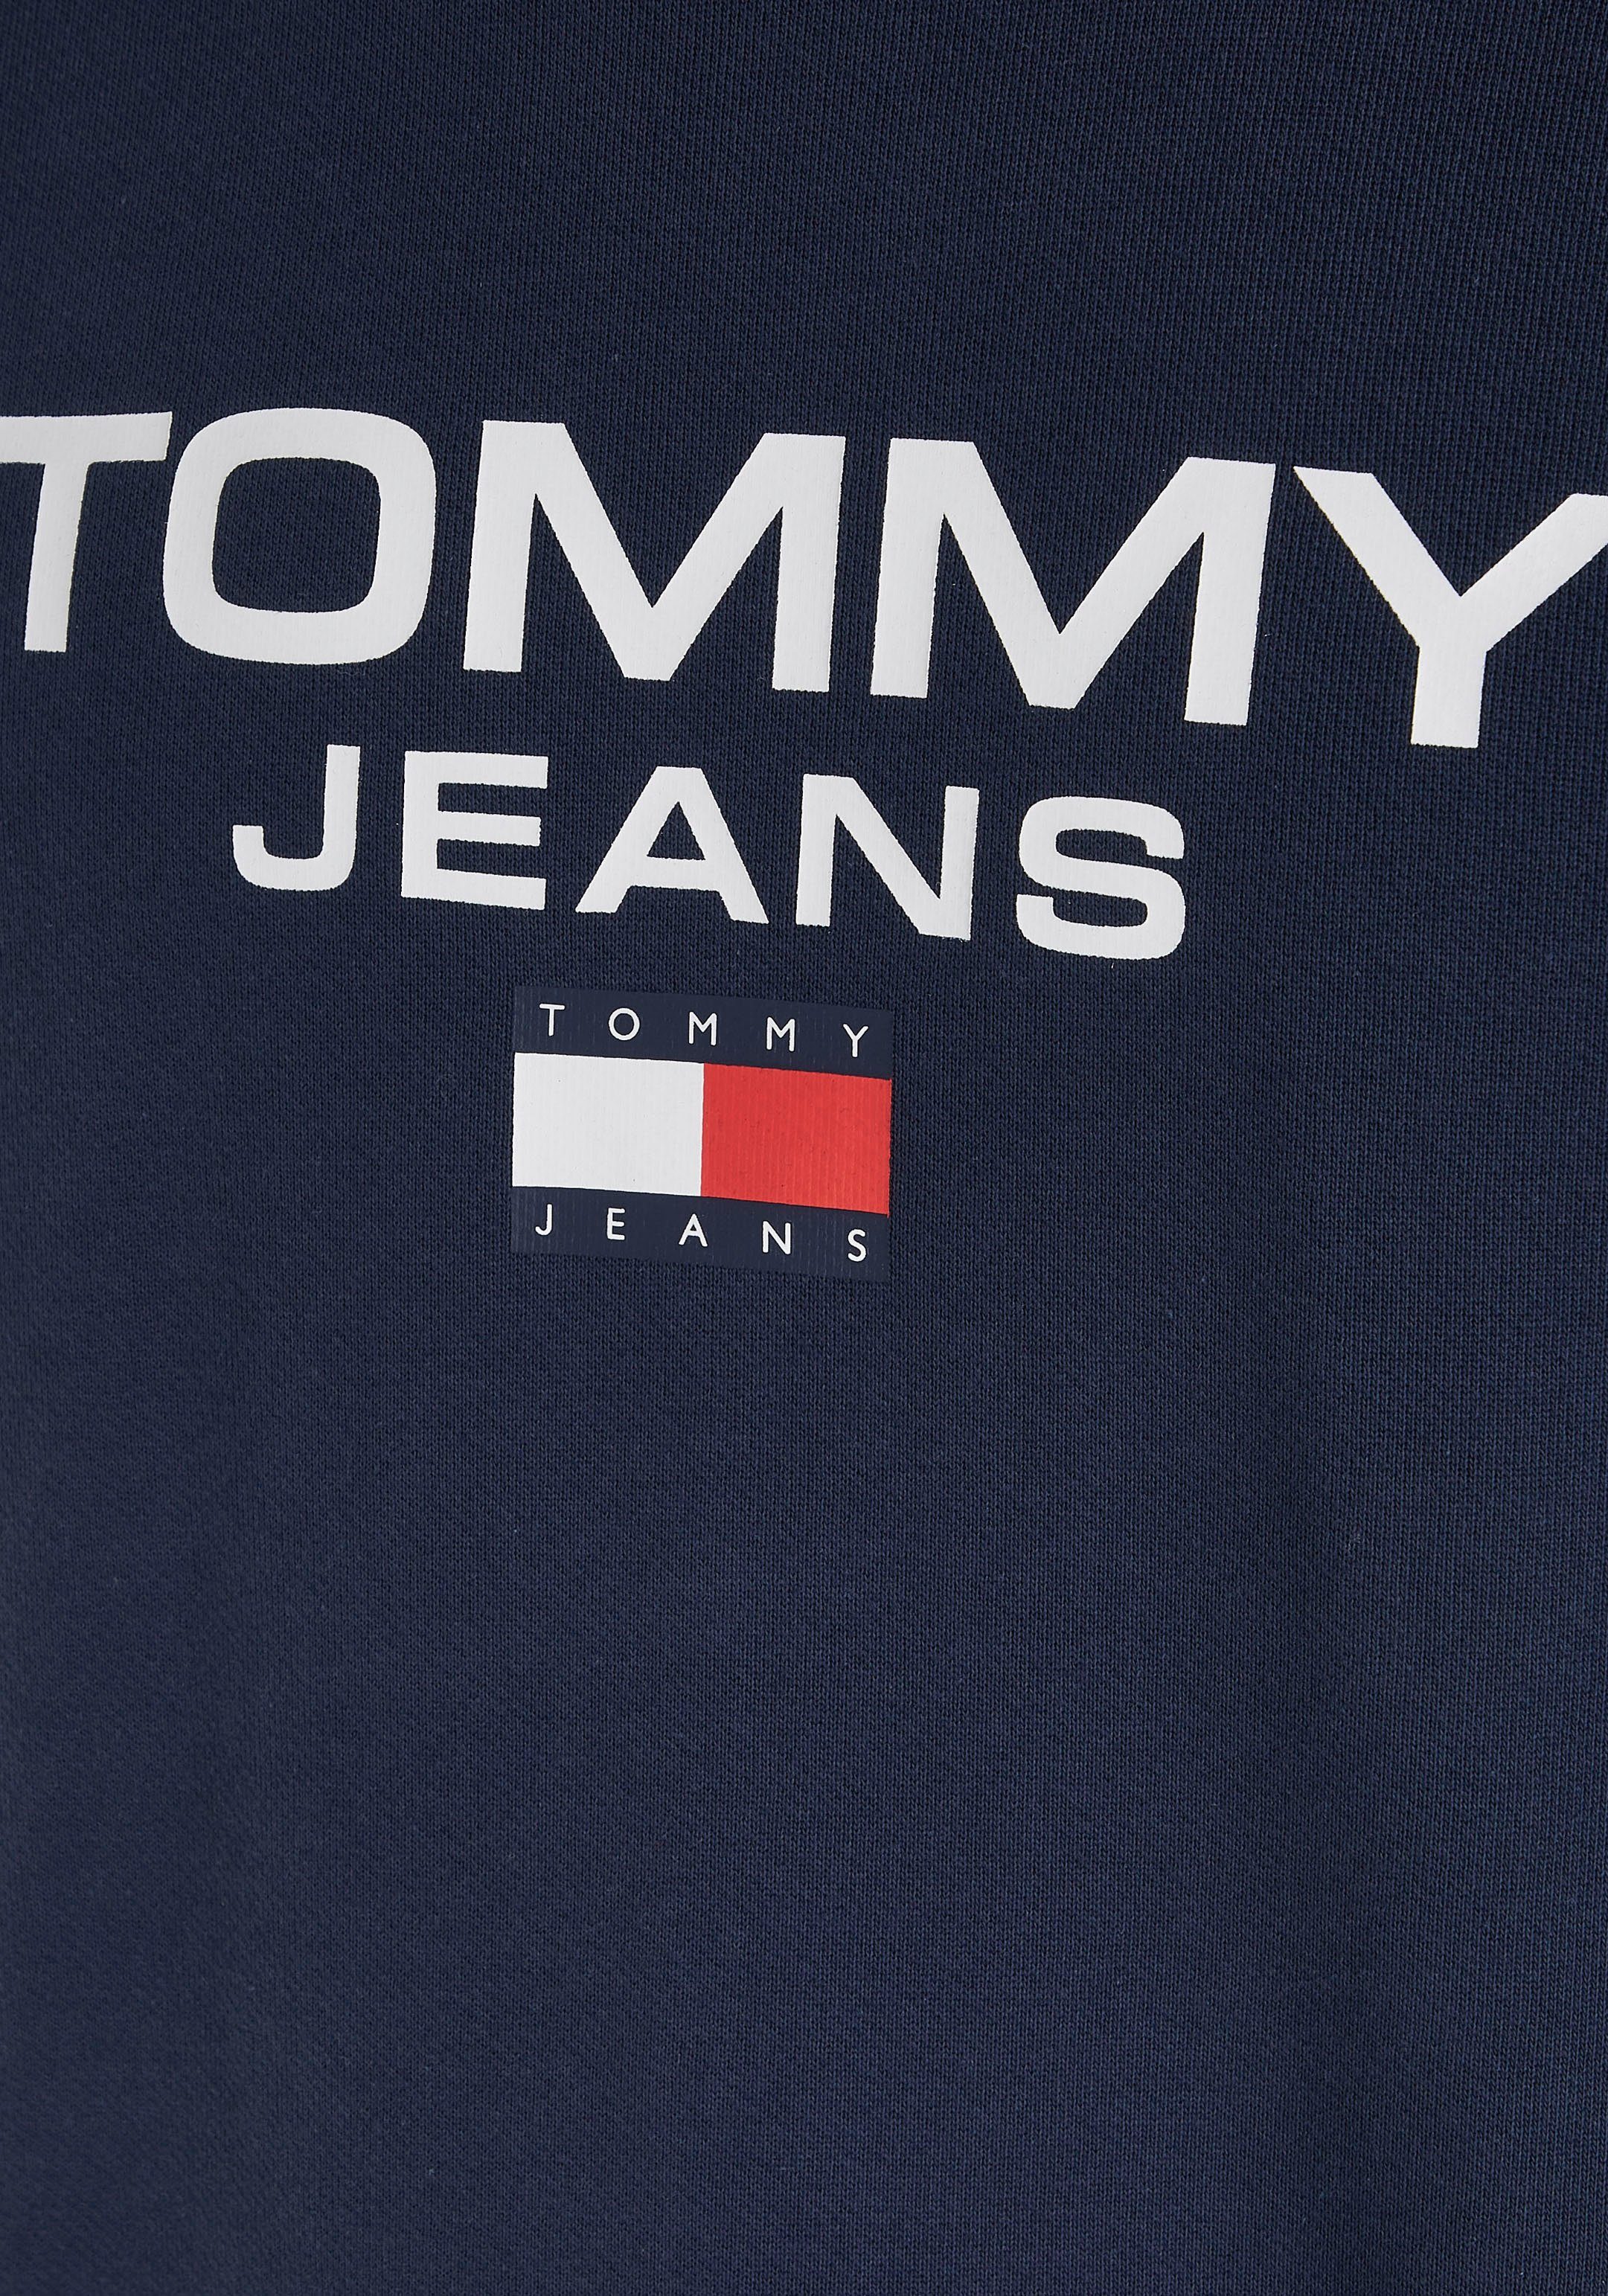 CREW Jeans Sweatshirt Tommy Logodruck Navy Twilight mit ENTRY REG TJM